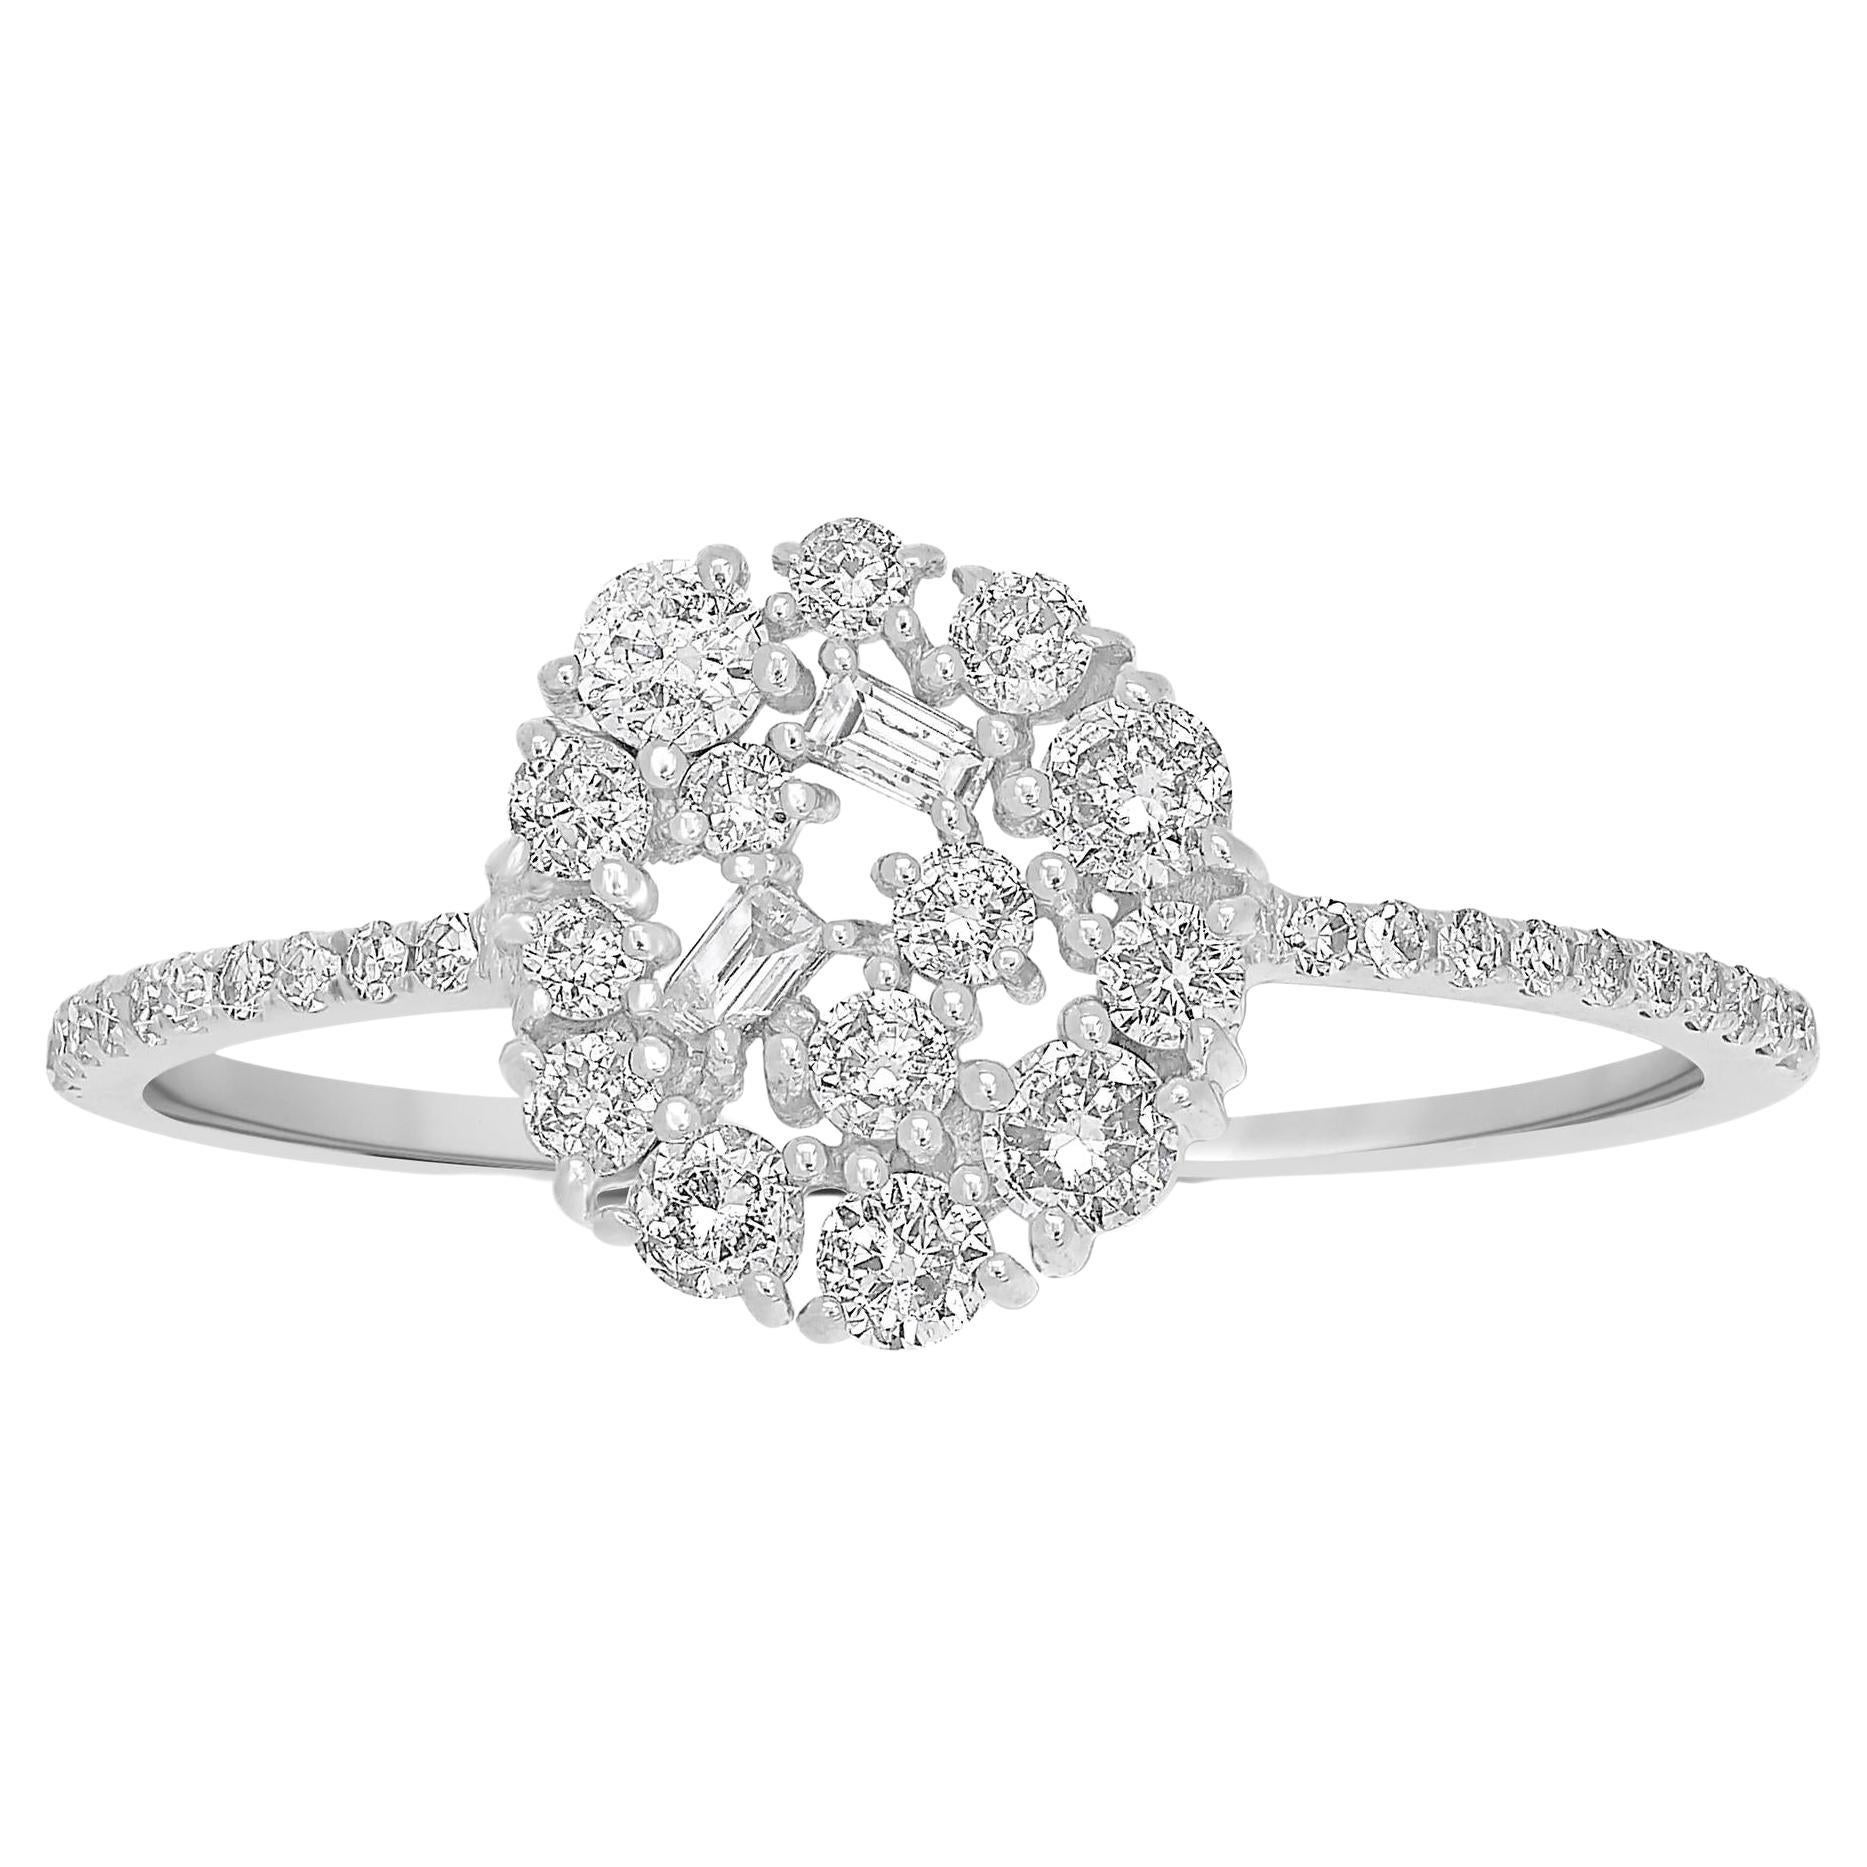 Luxle 3/8 Carat T.W. Diamond Cluster Ring in 14k White Gold